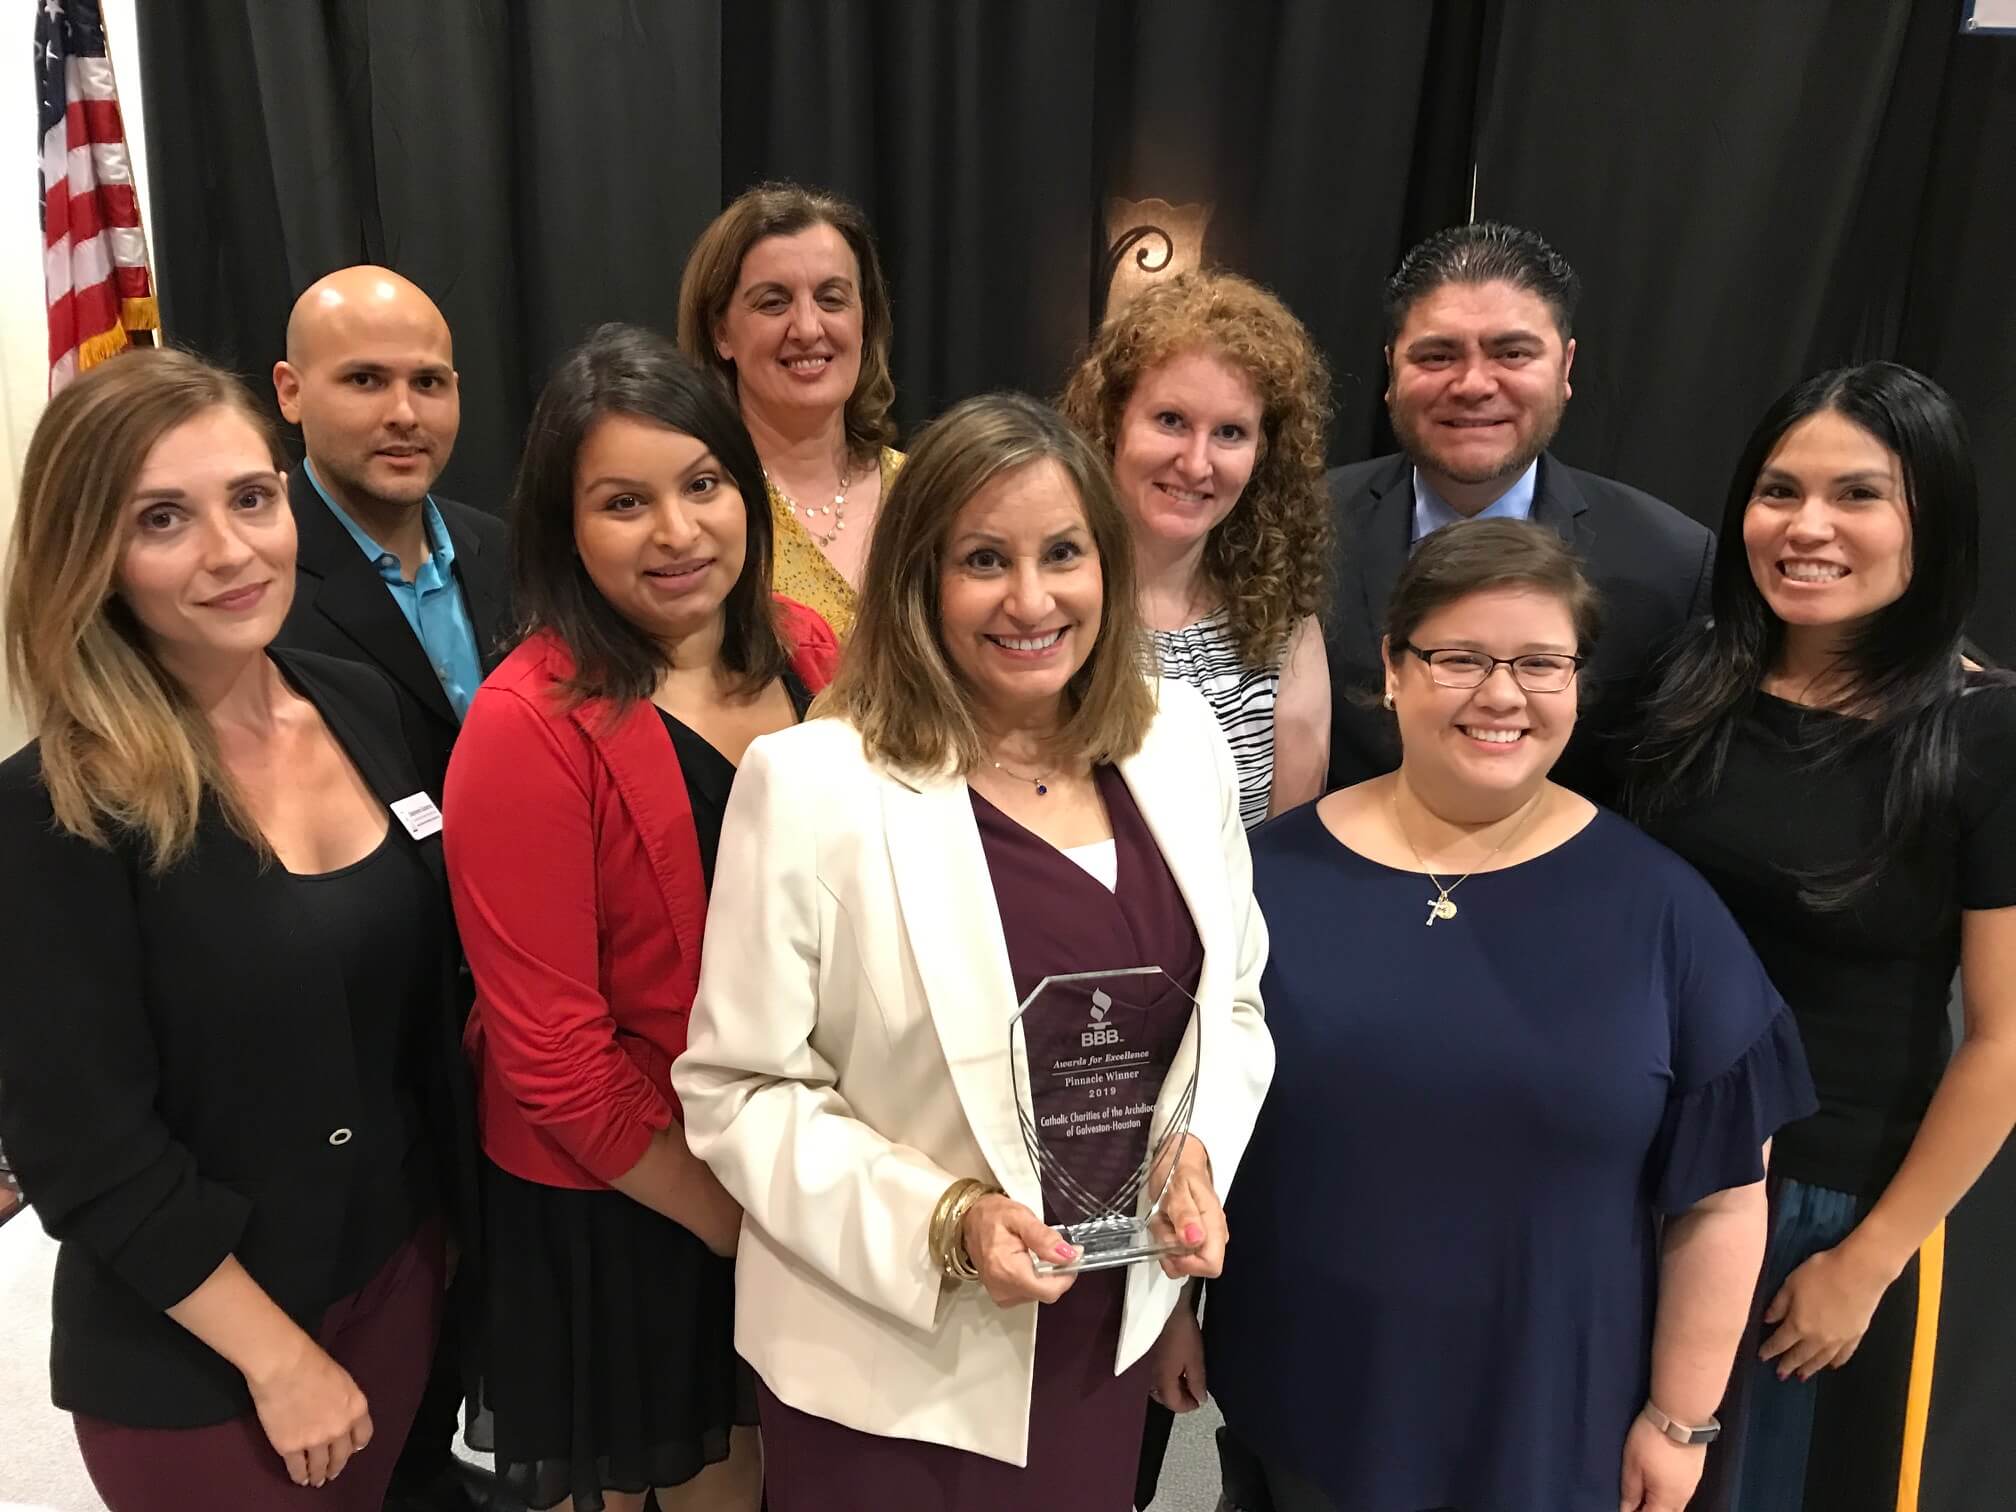 Catholic Charities receives 2019 Pinnacle Award from the Better Business Bureau (Houston)